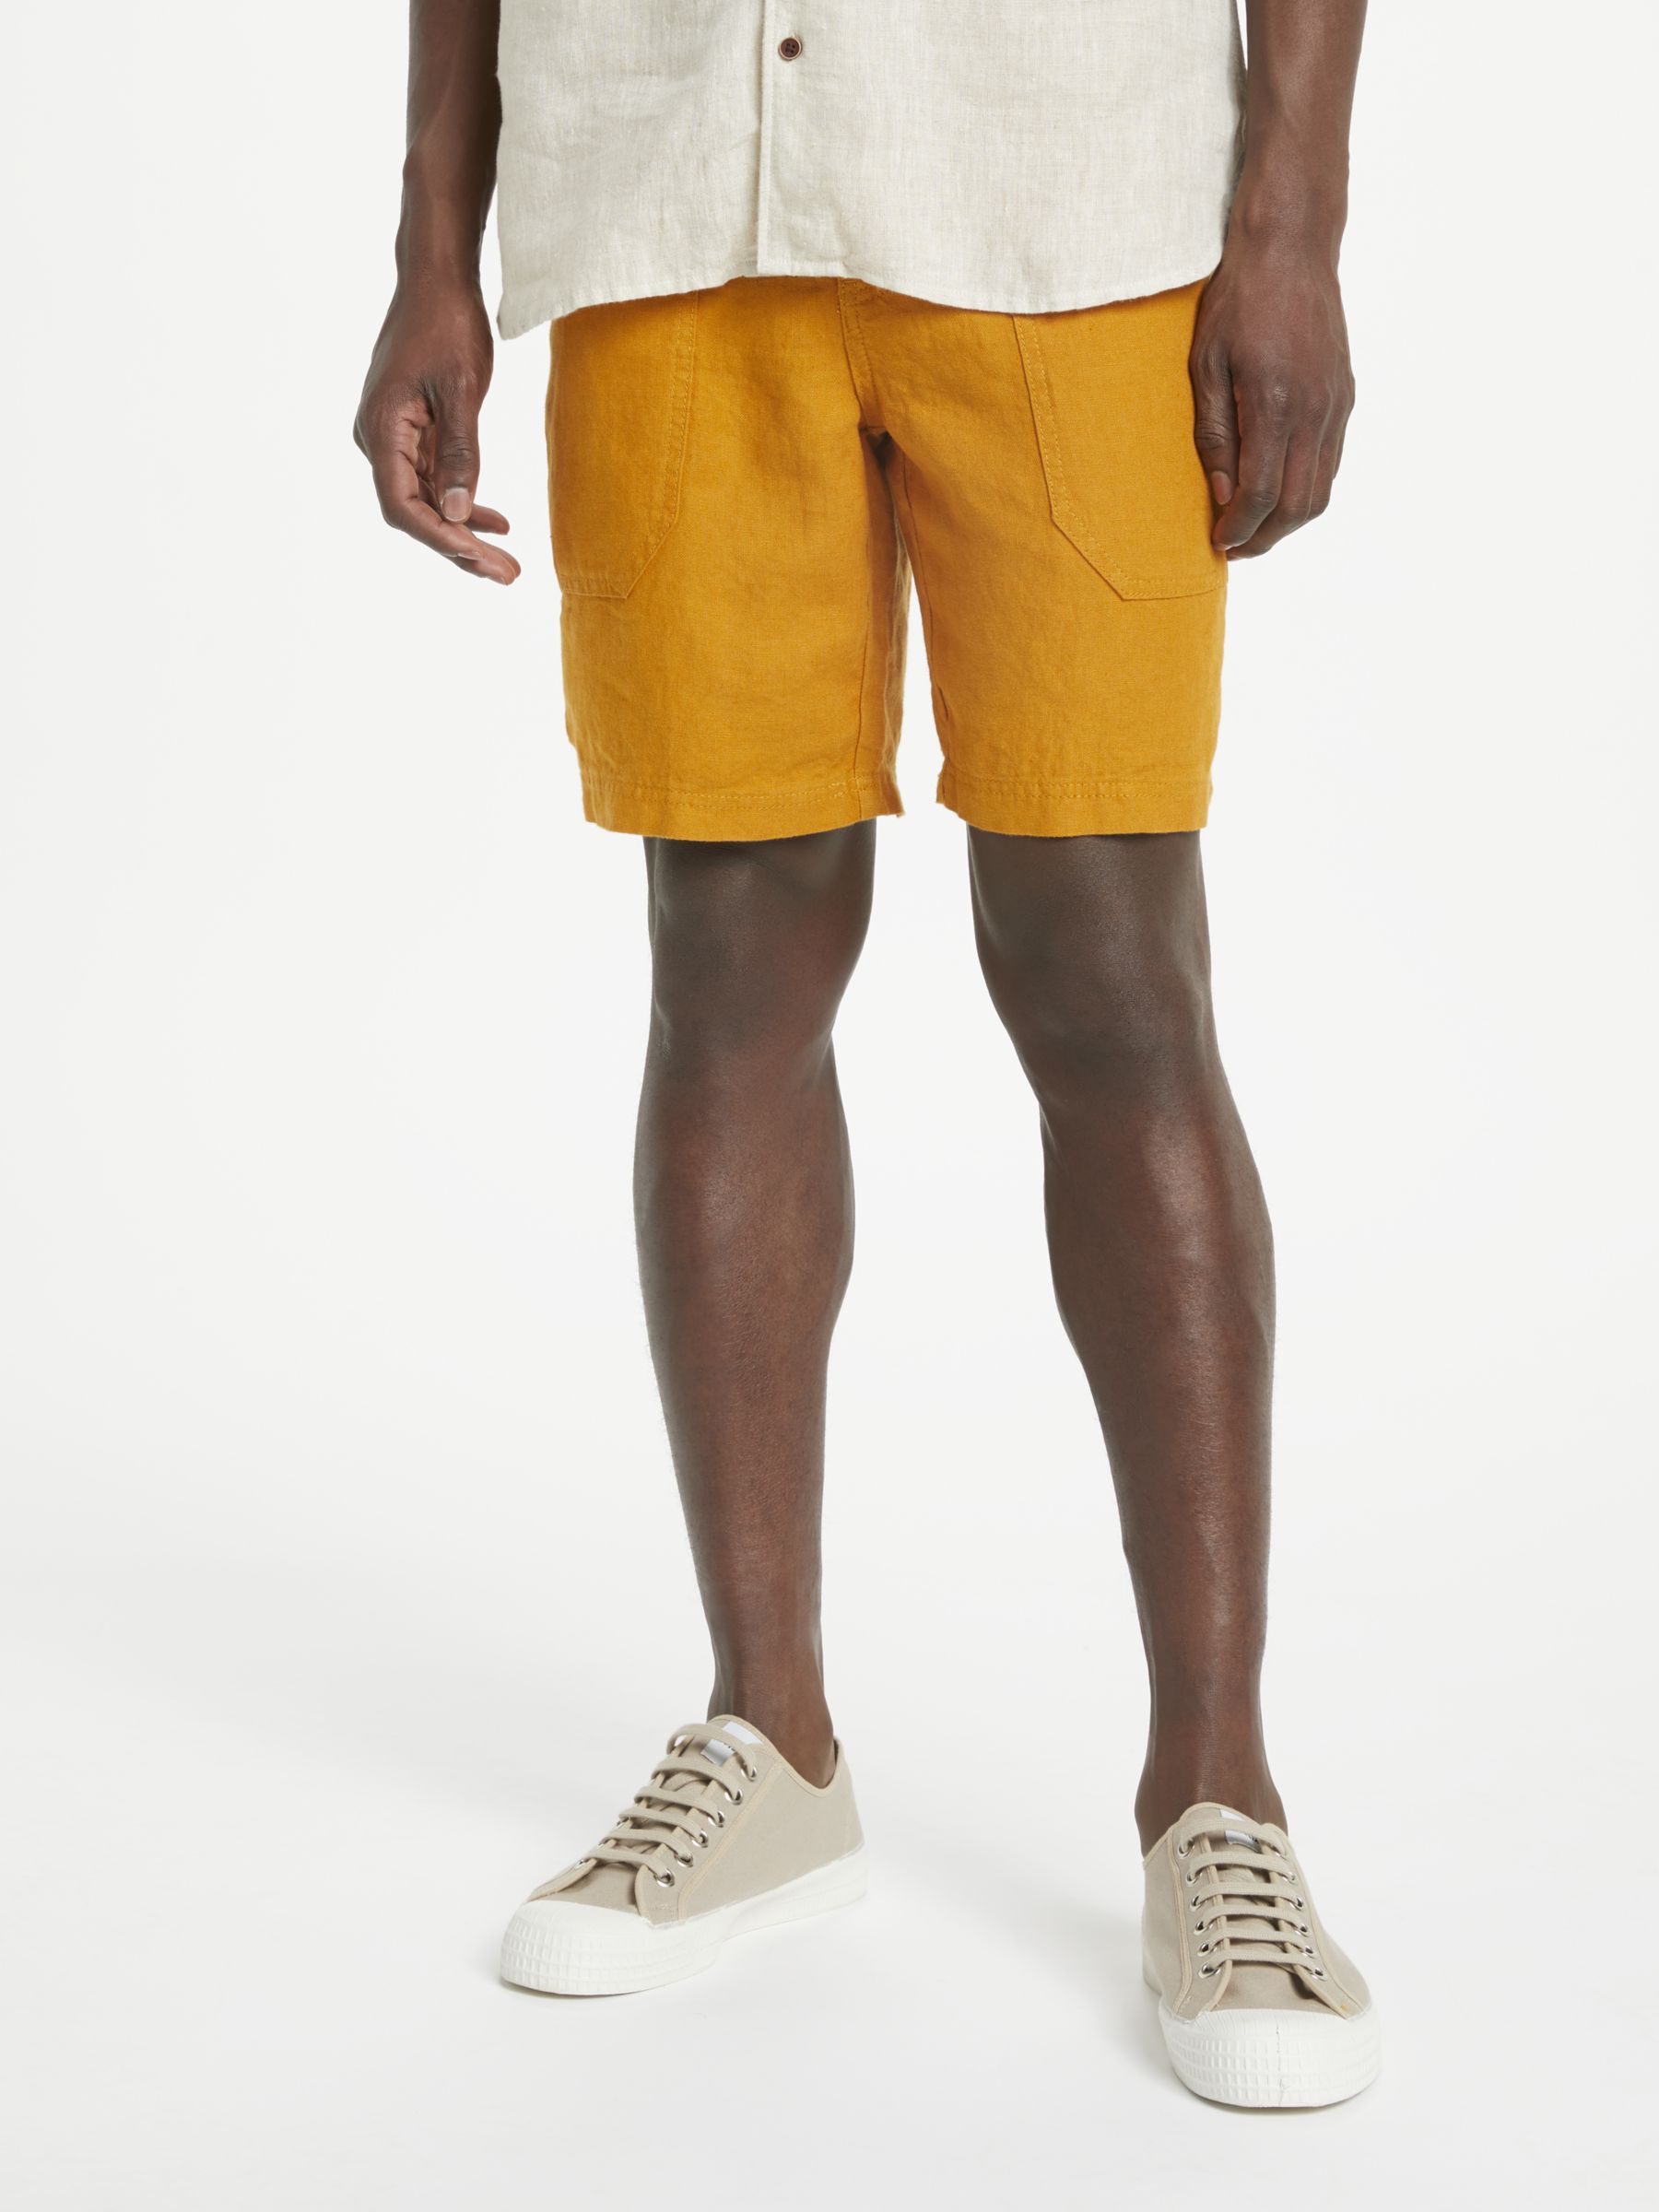 JOHN LEWIS & Co. Linen Shorts, Gold, 32R